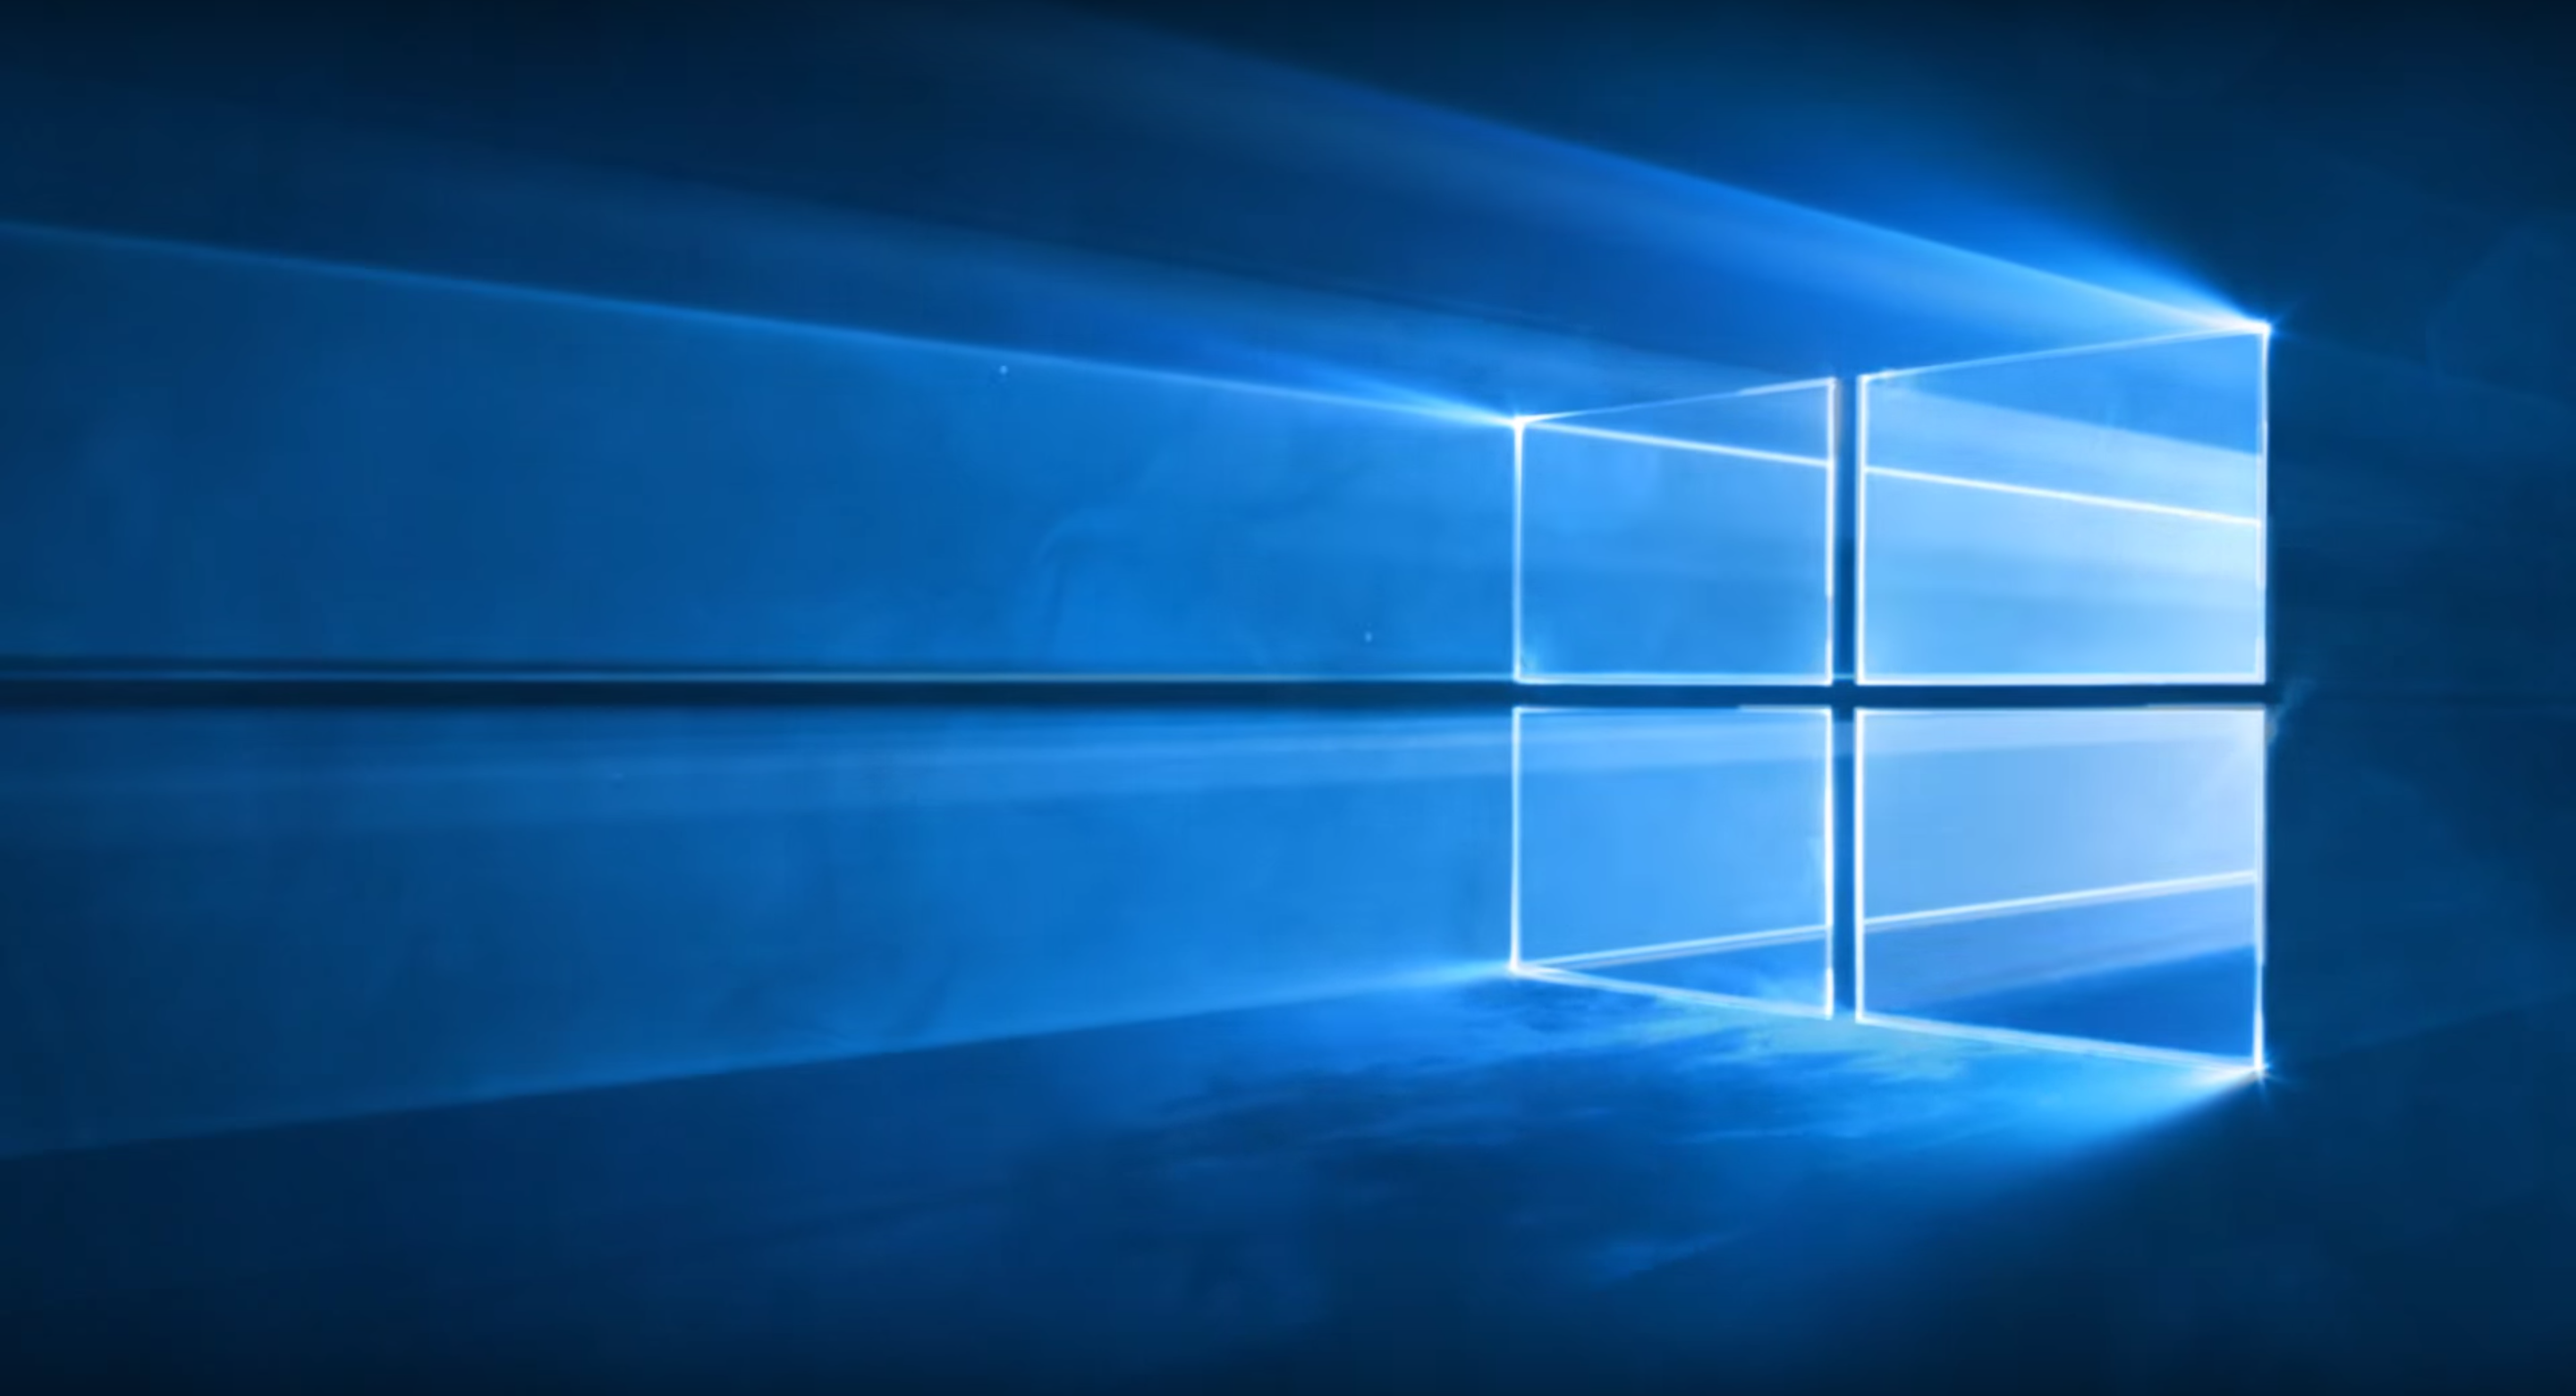 Windows 10 Hero Image